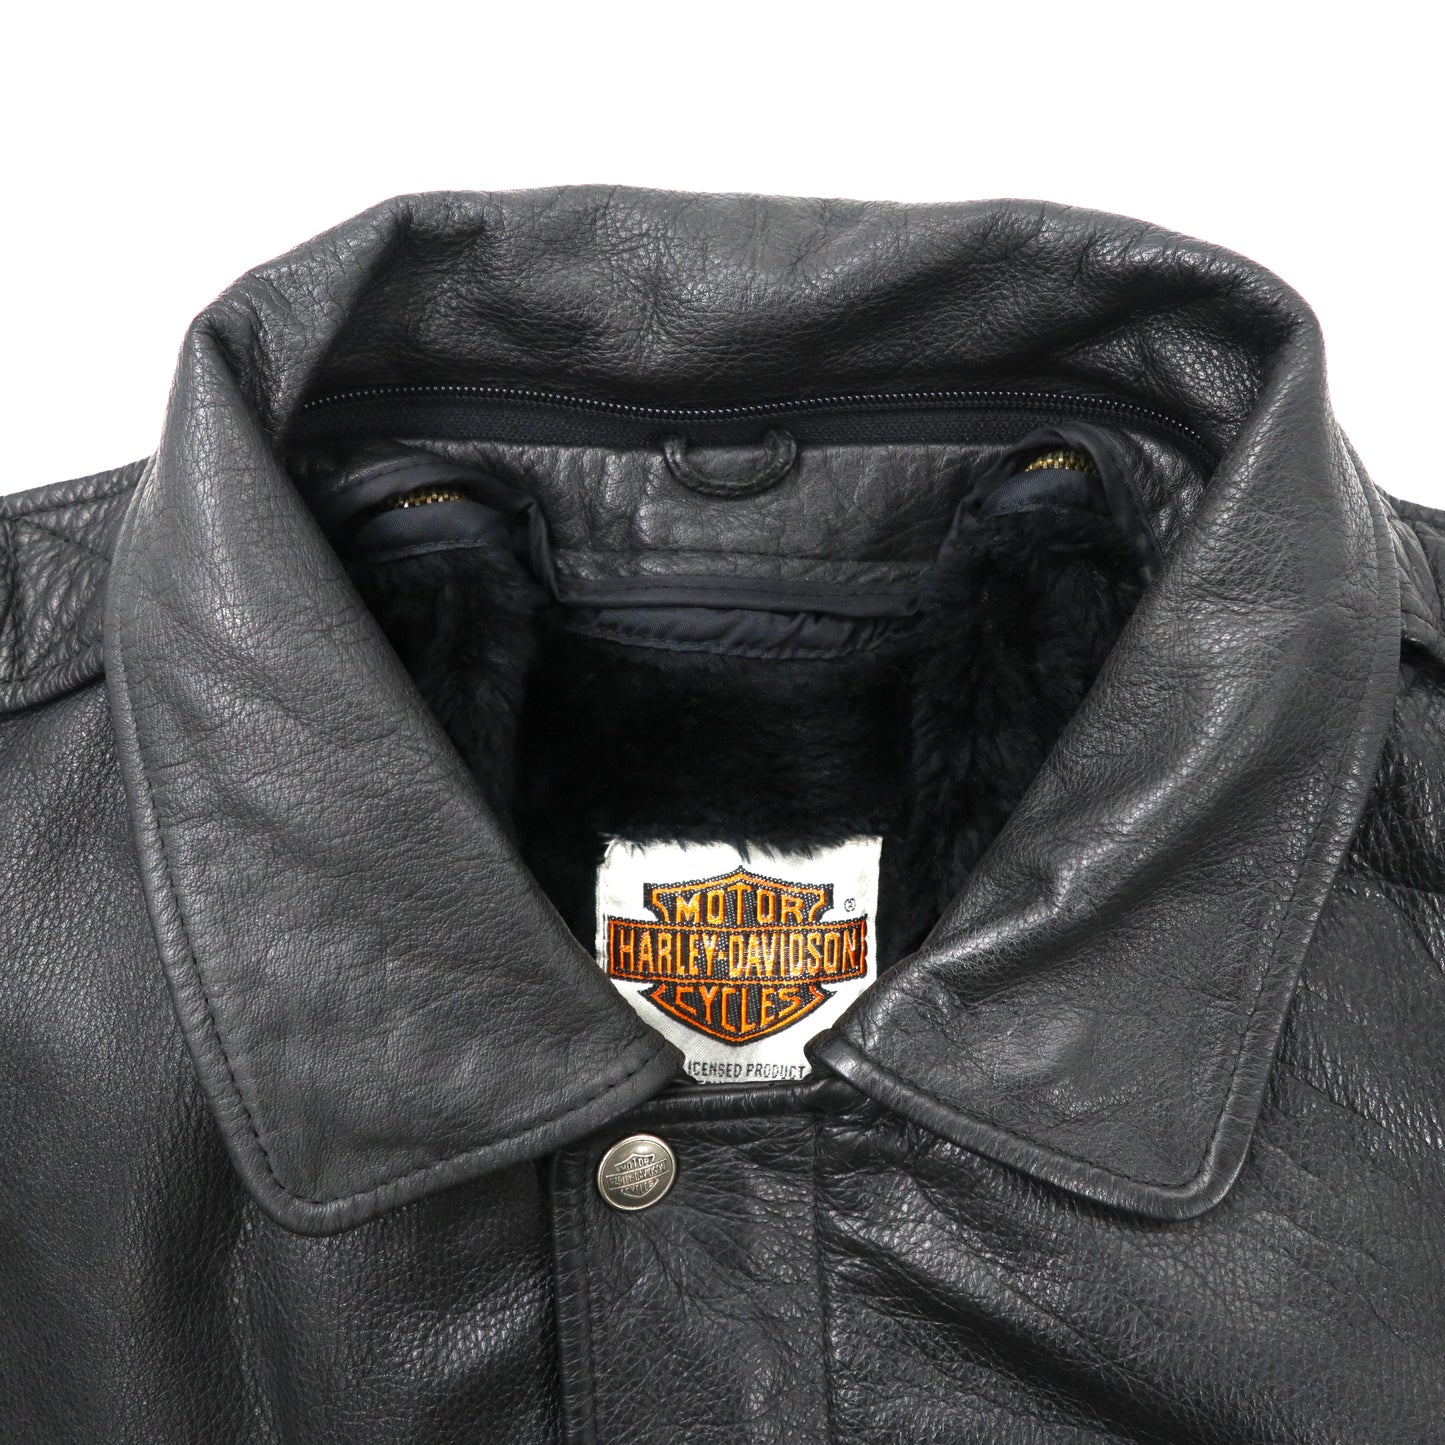 Harley Davidson G-1 Leather Flight Jacket 38 Black Cow Leather